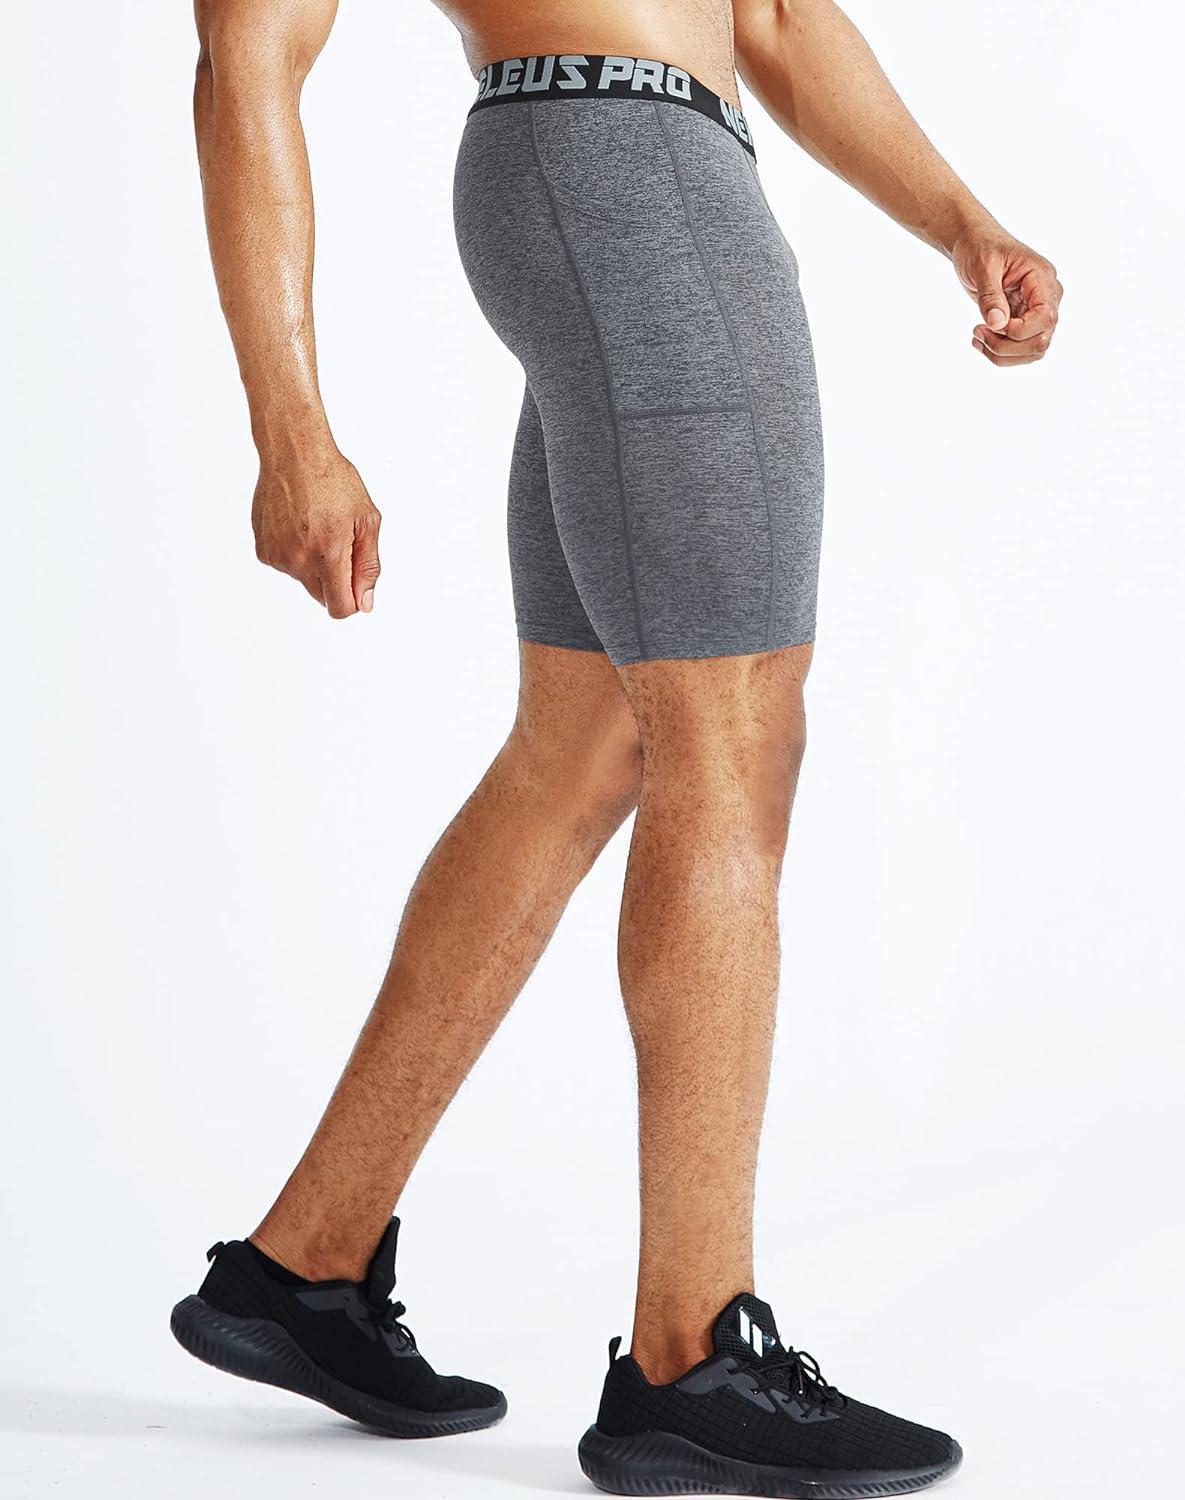 NELEUS Men's Compression Shorts Pack Of 3 Suitable Training